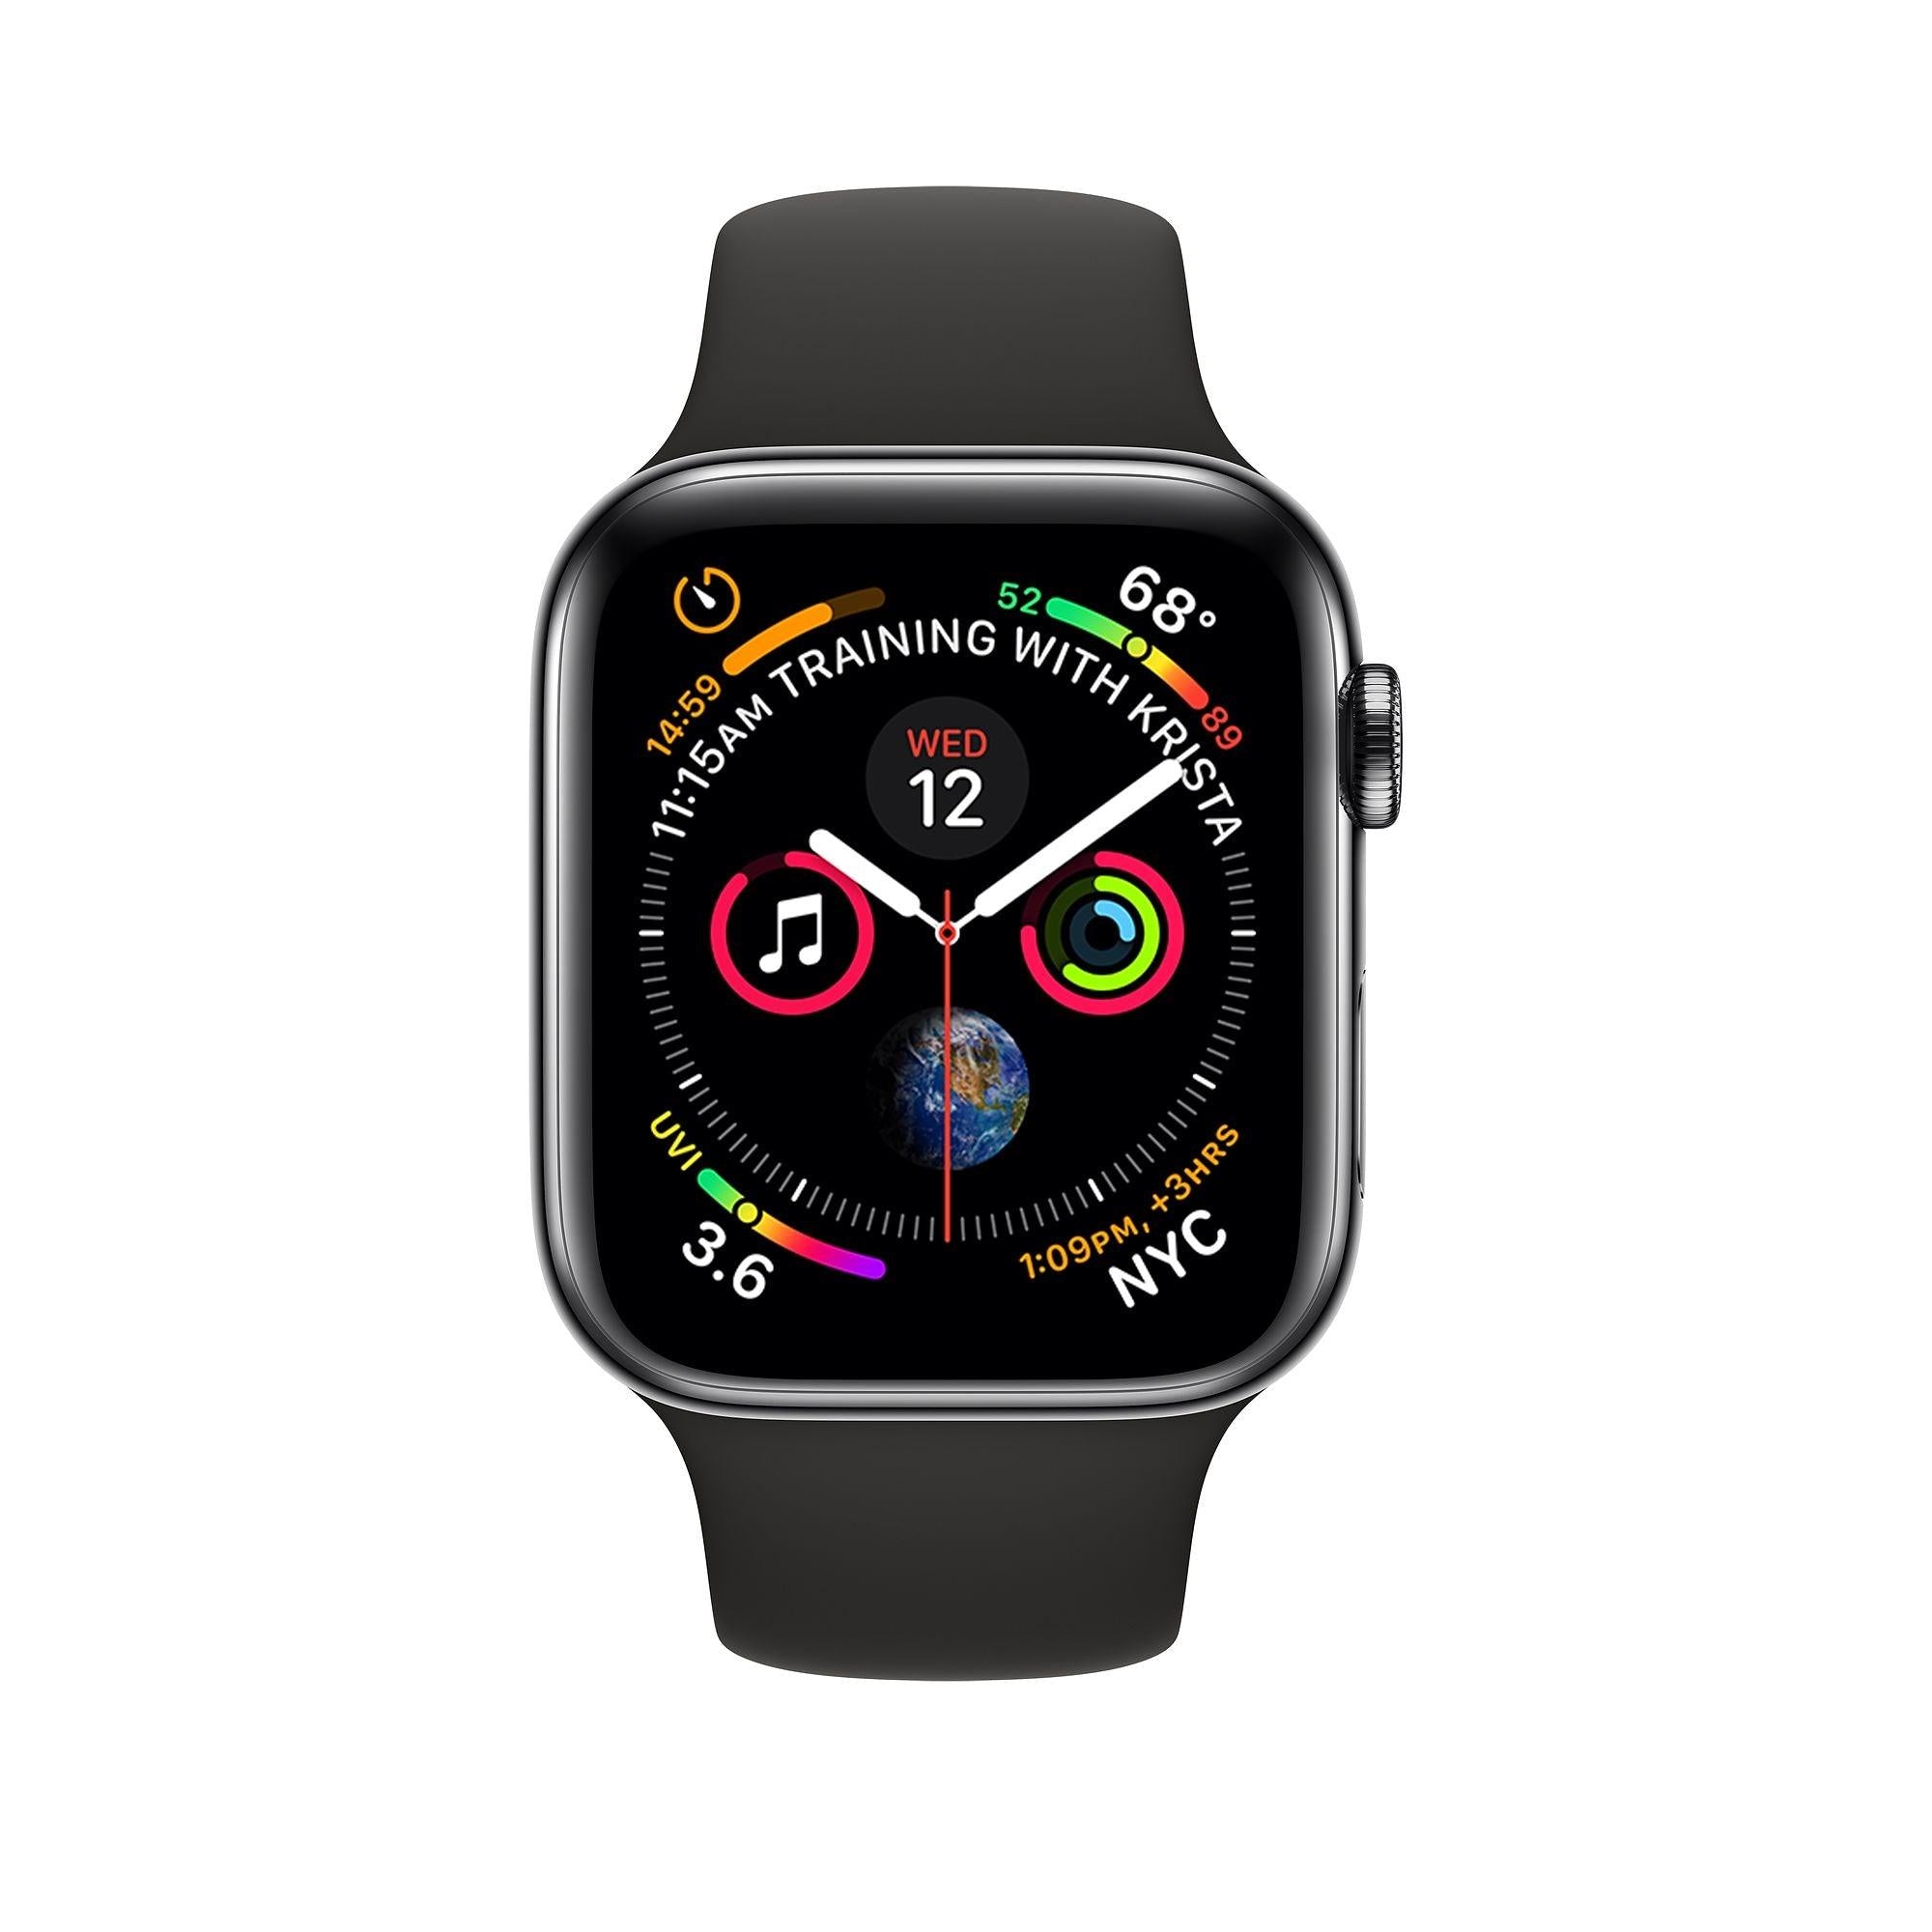 Comprar Apple Watch Serie 4 en Guatemala - Cell Export GT